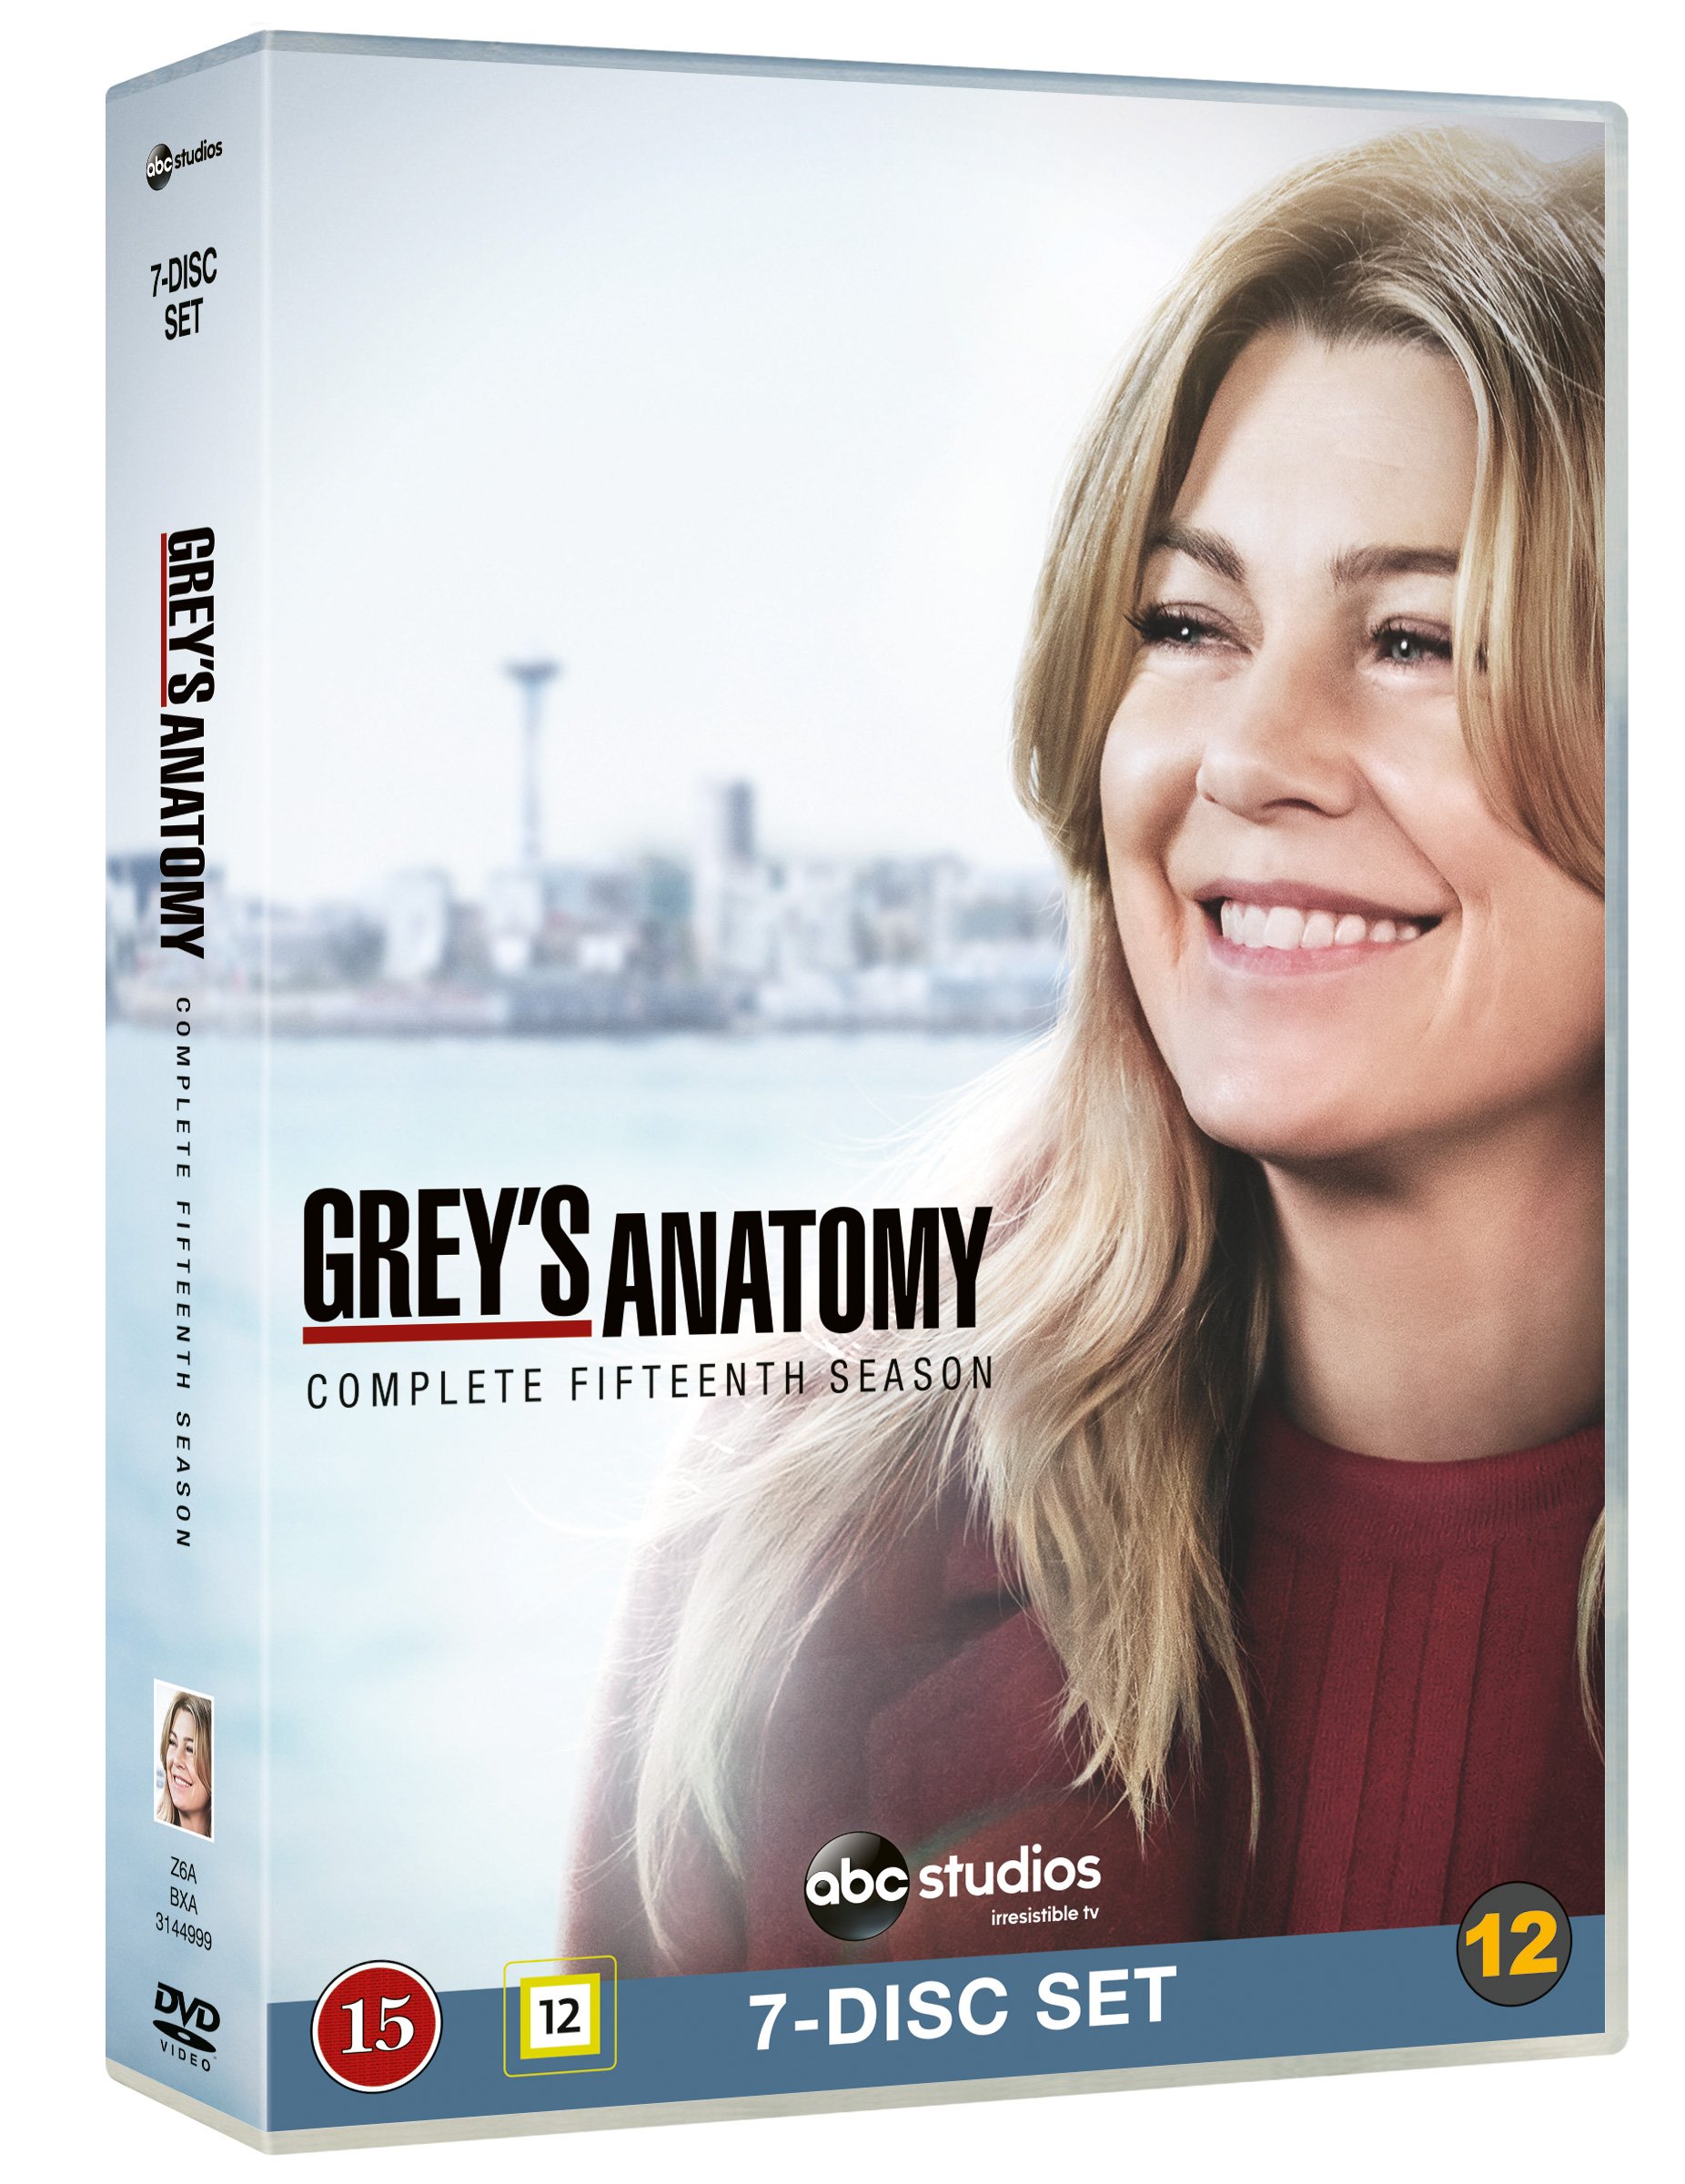 ​Greys anatomy Season 15 - DVD